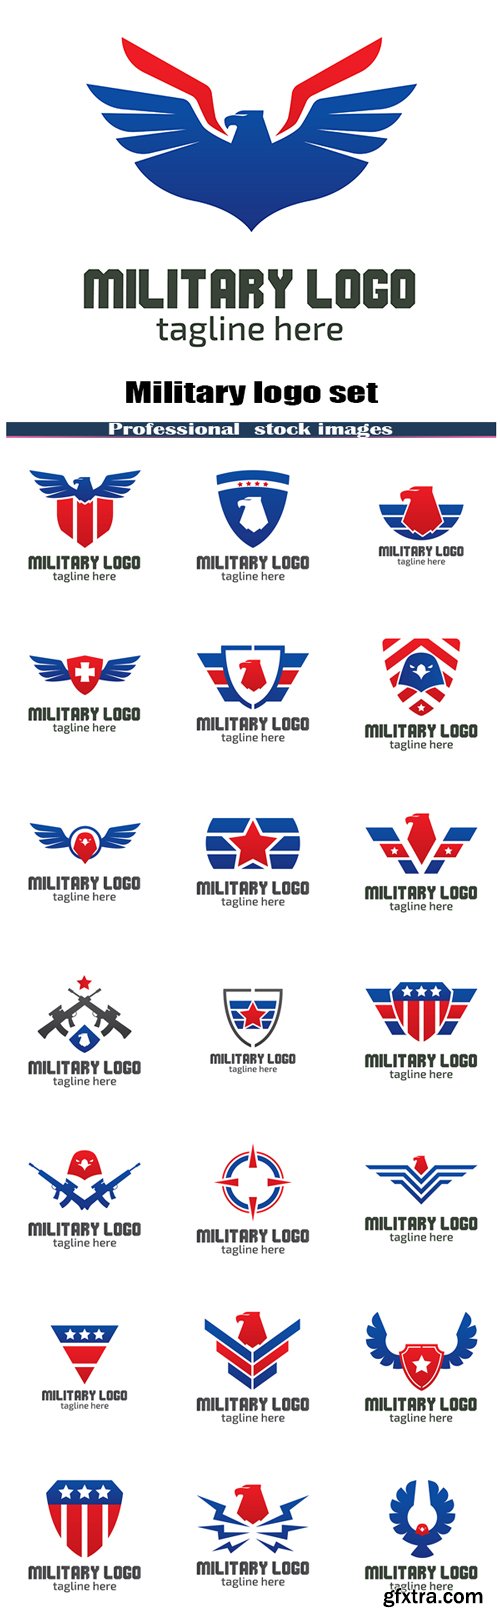 Military logo set